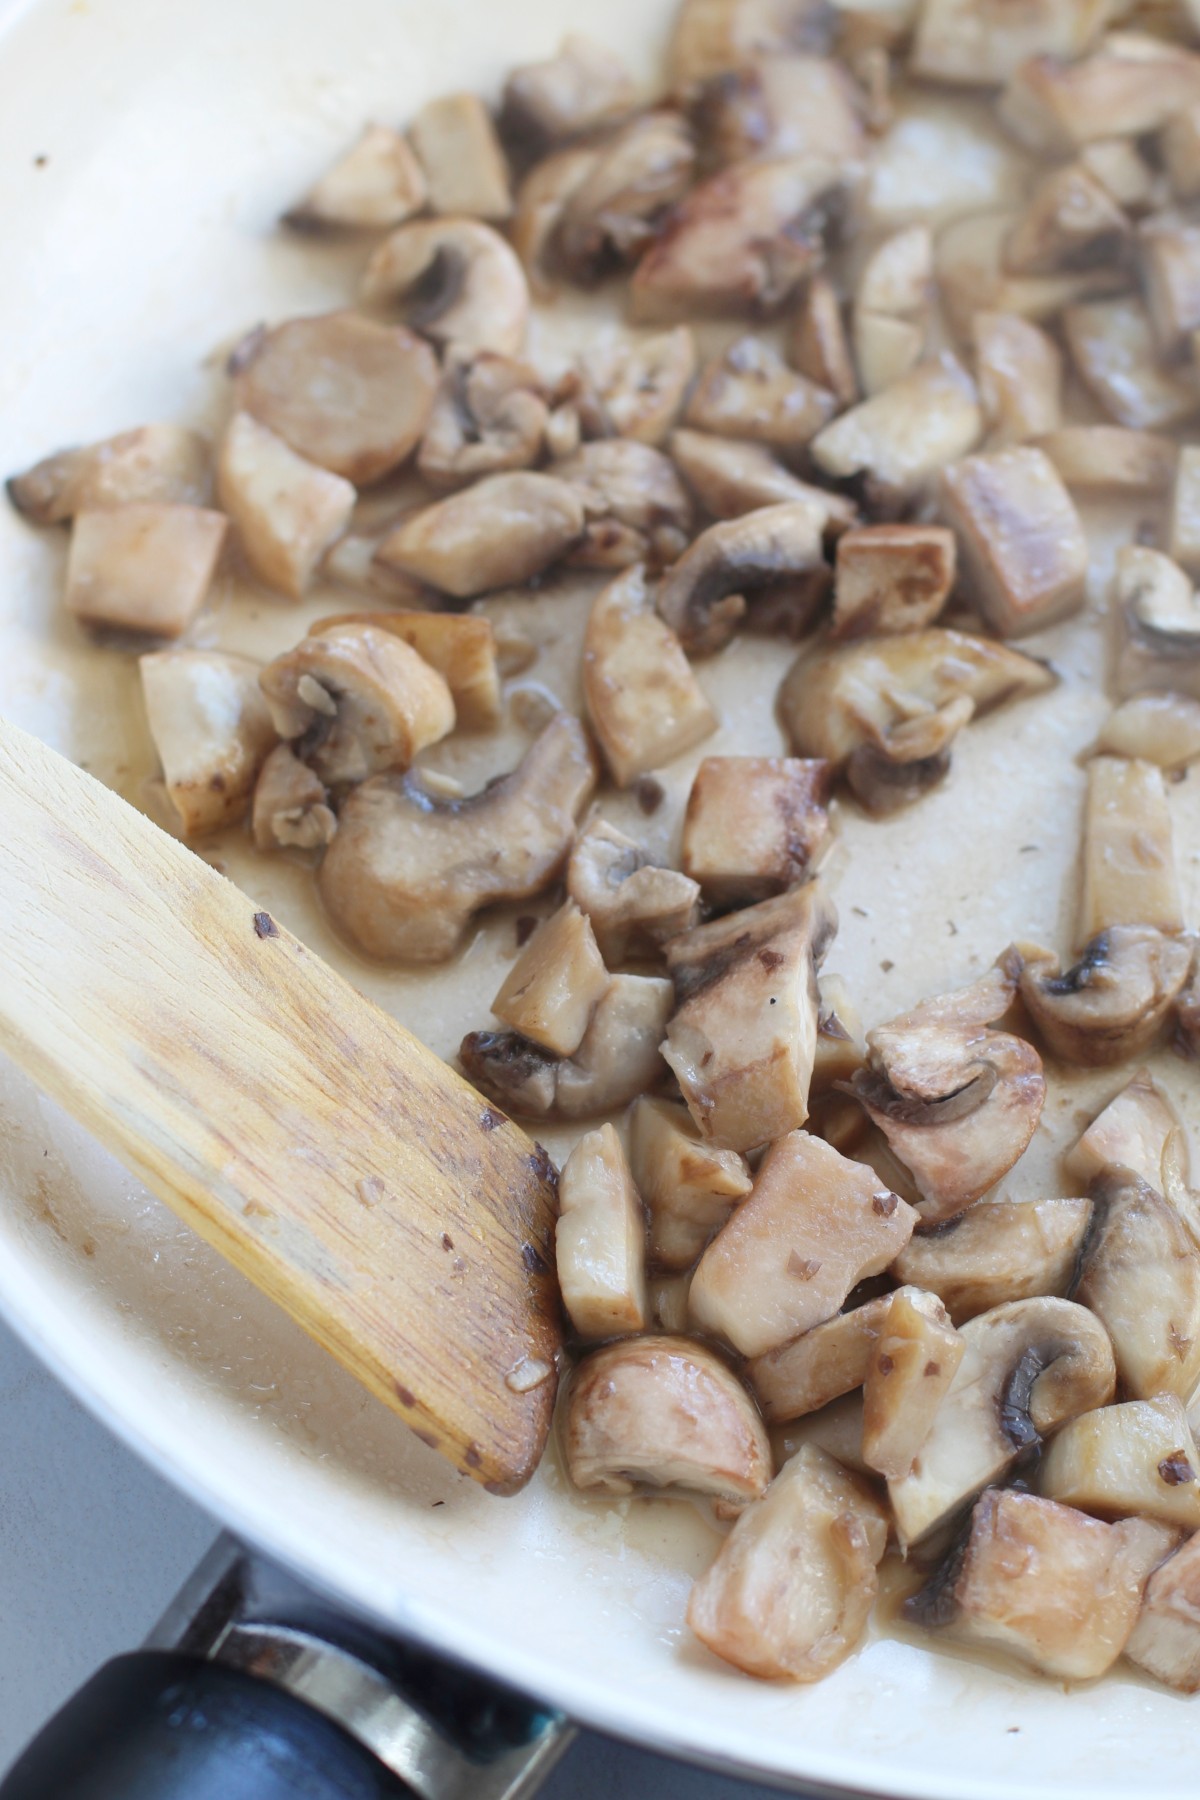 Sauteeing mushrooms for Leftover Turkey Casserole 